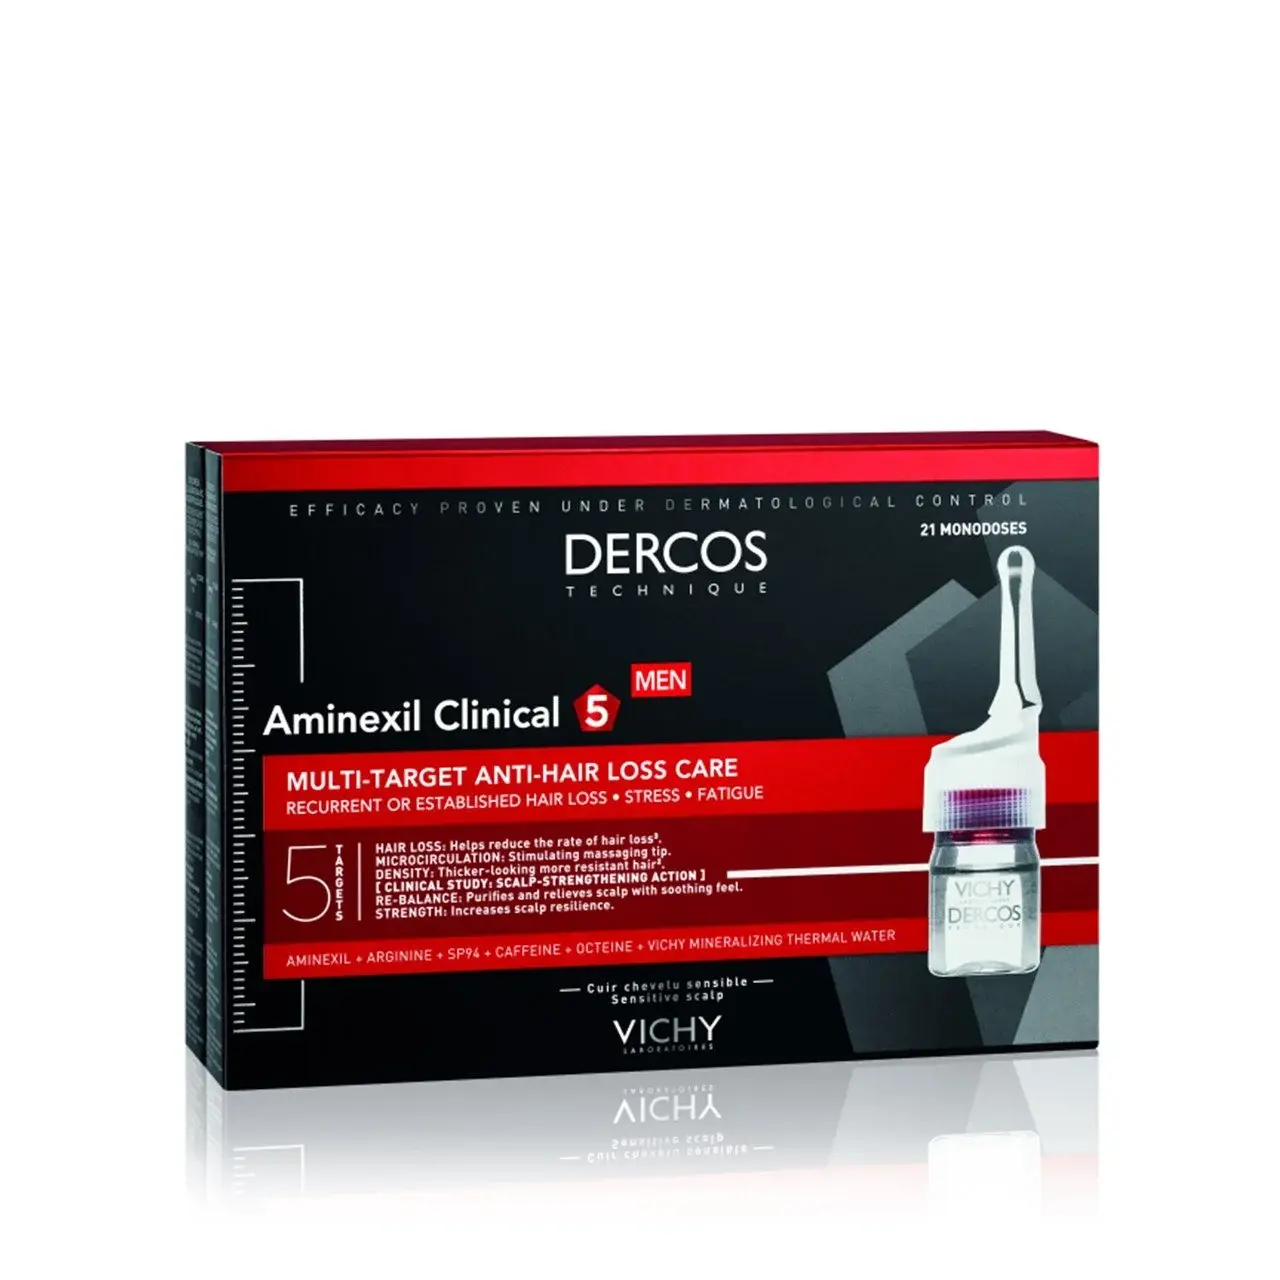 VICHY Dercos aminexil clinical 5 третман против опаѓање на косата за мажи